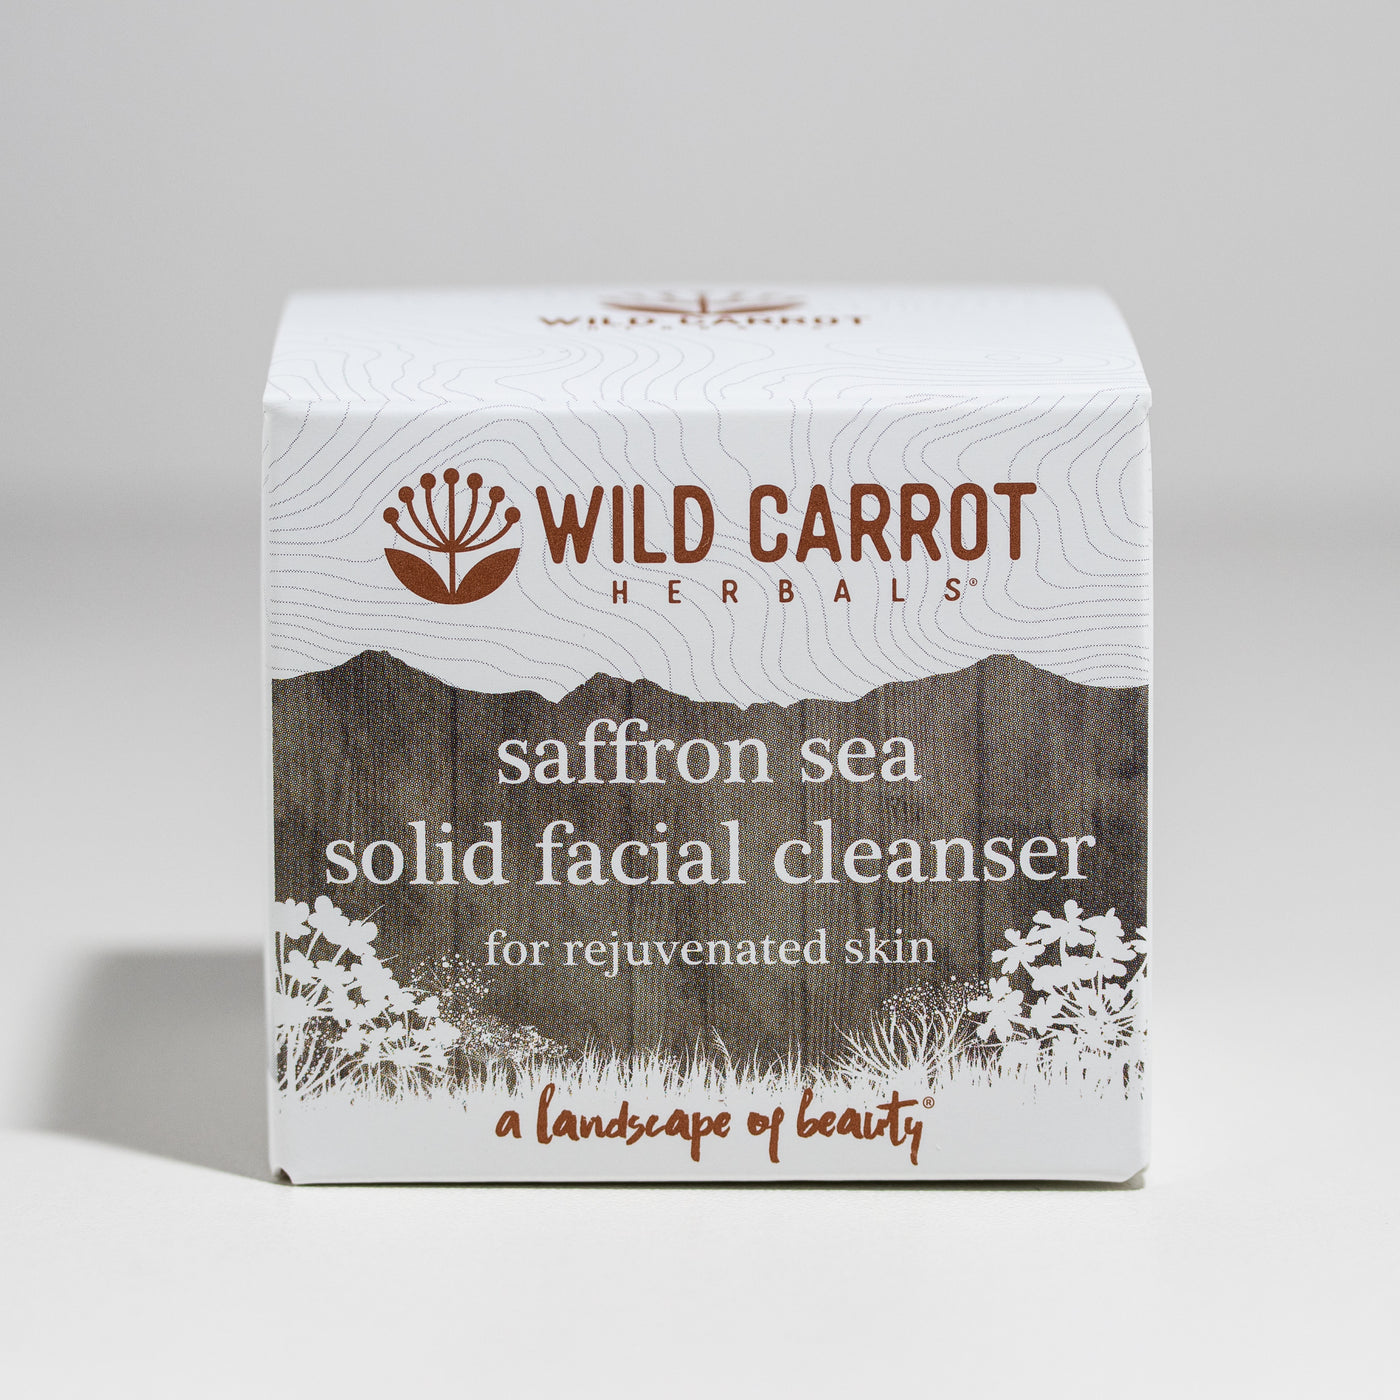 Saffron Sea Solid Facial Cleanser for Rejuvenated Skin